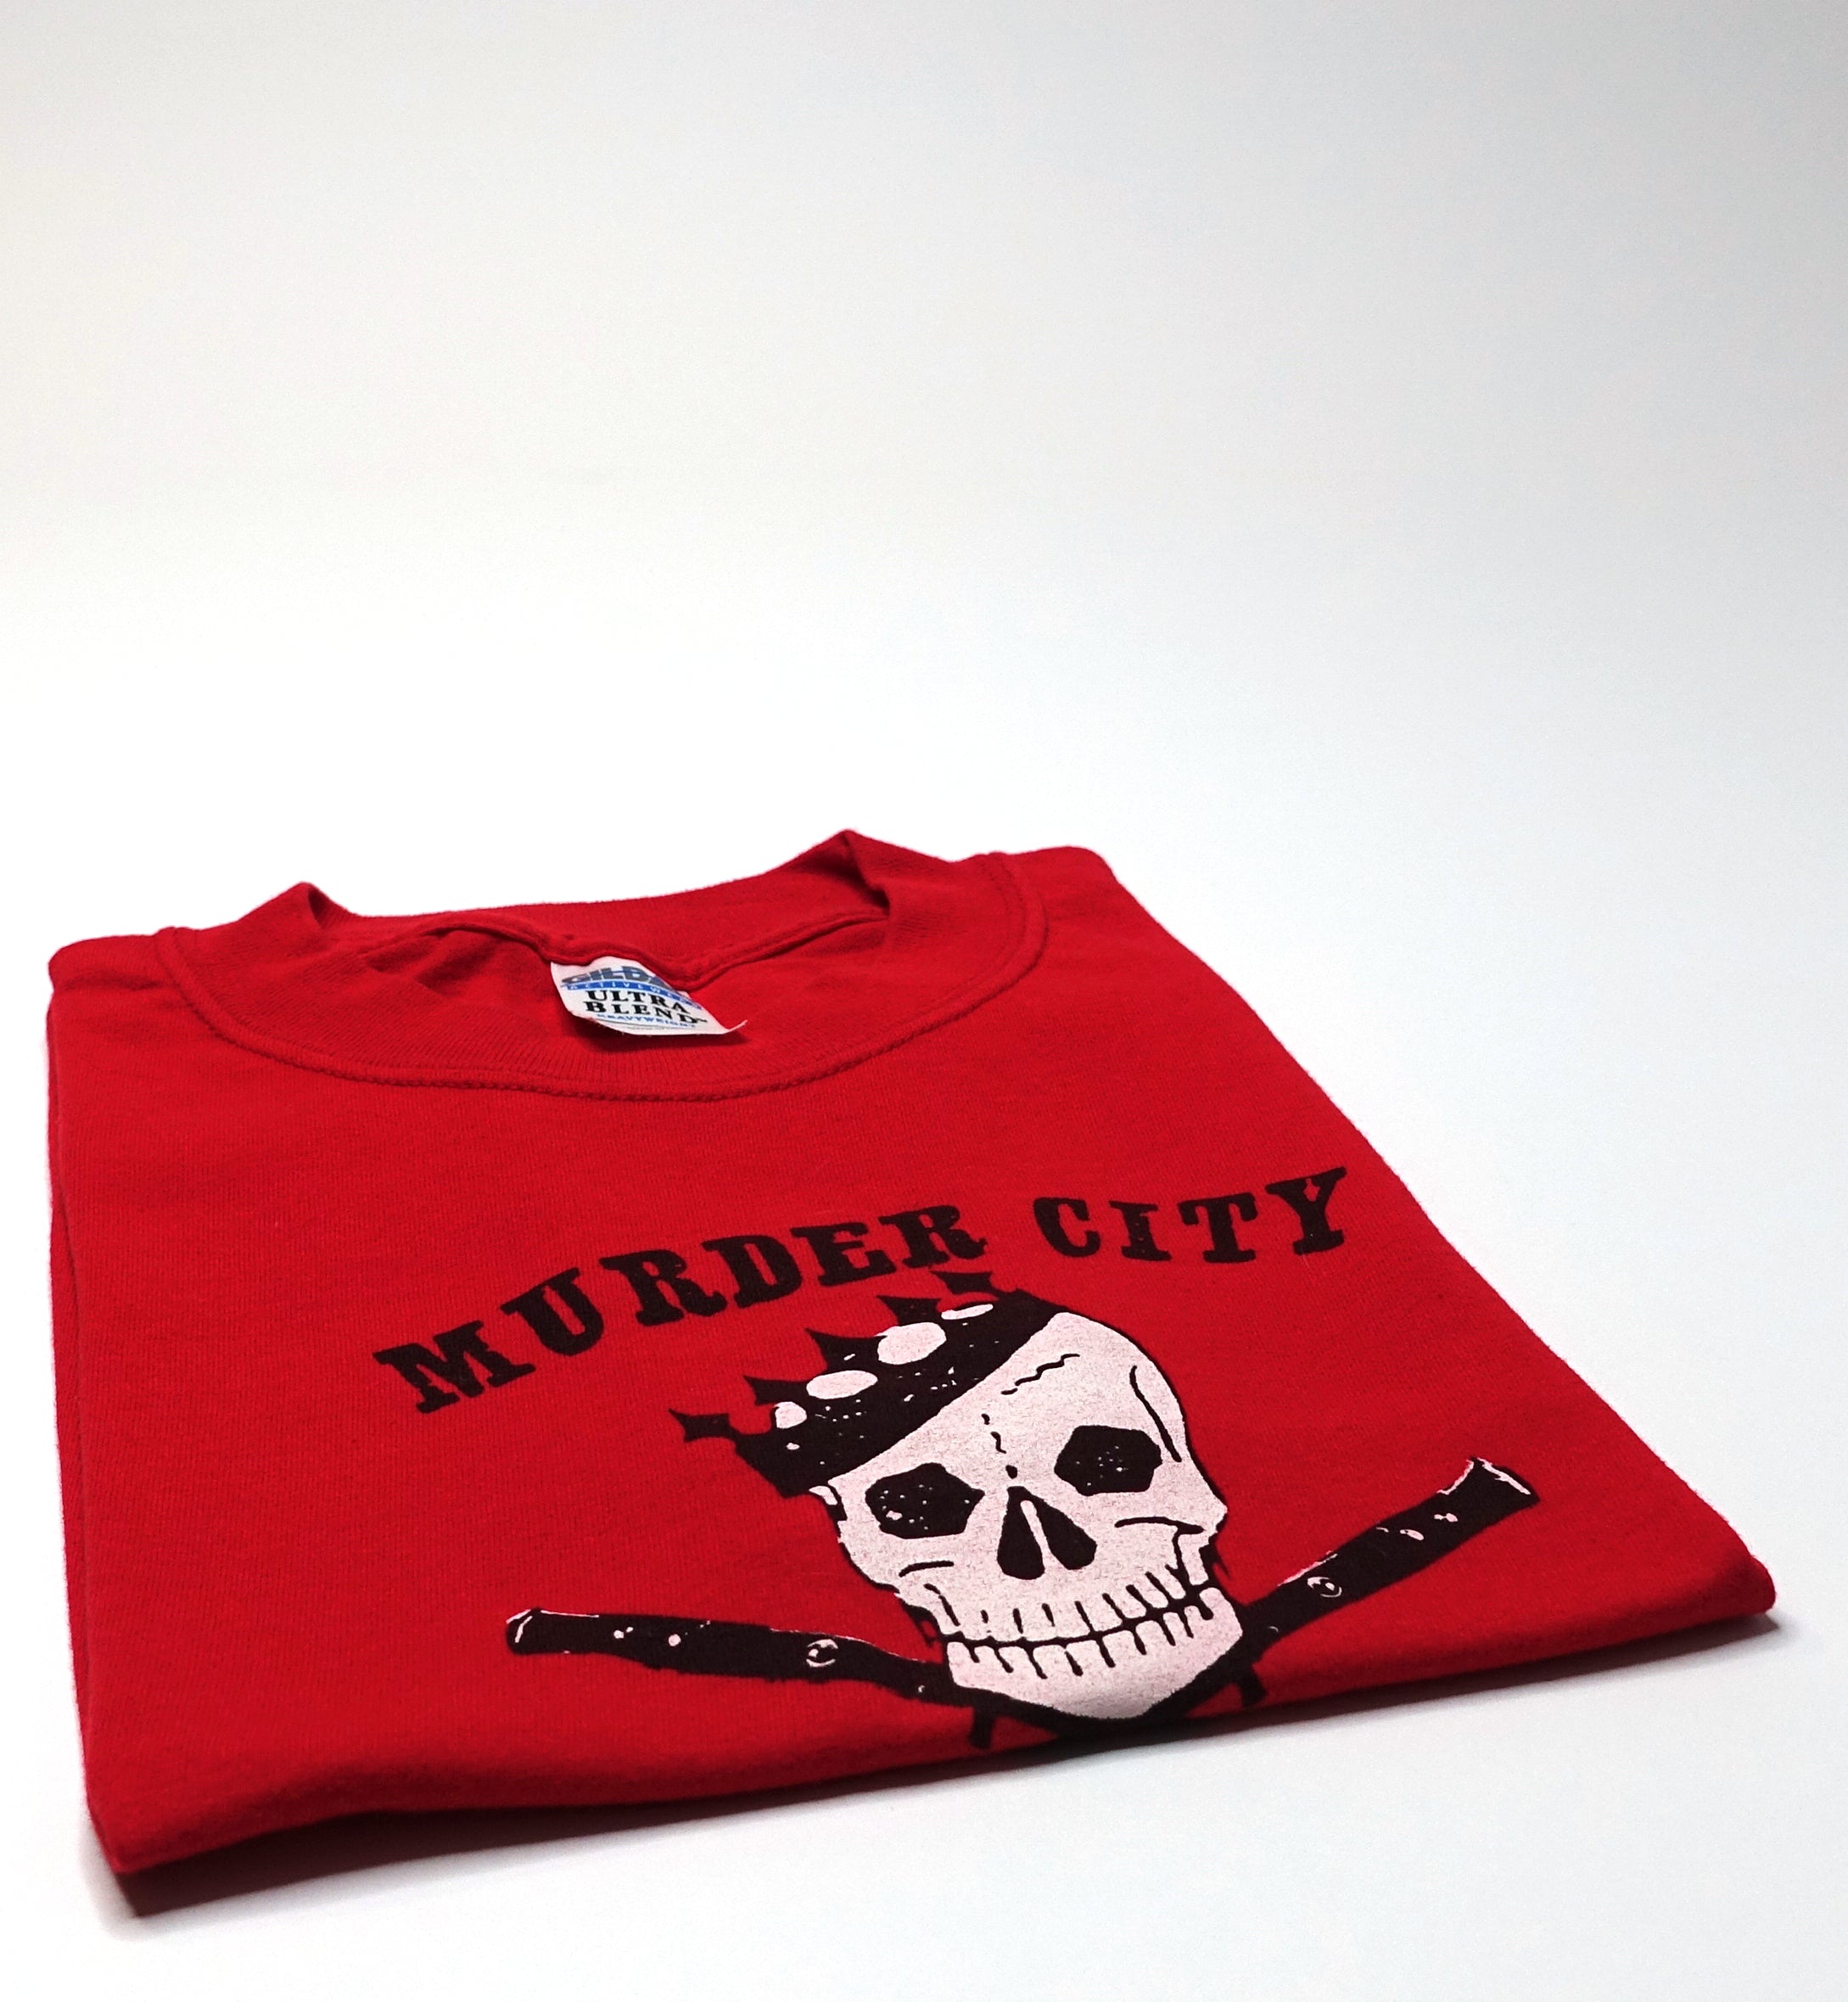 Murder City Devils ‎– CROWN SKULL Tour Shirt Size Small